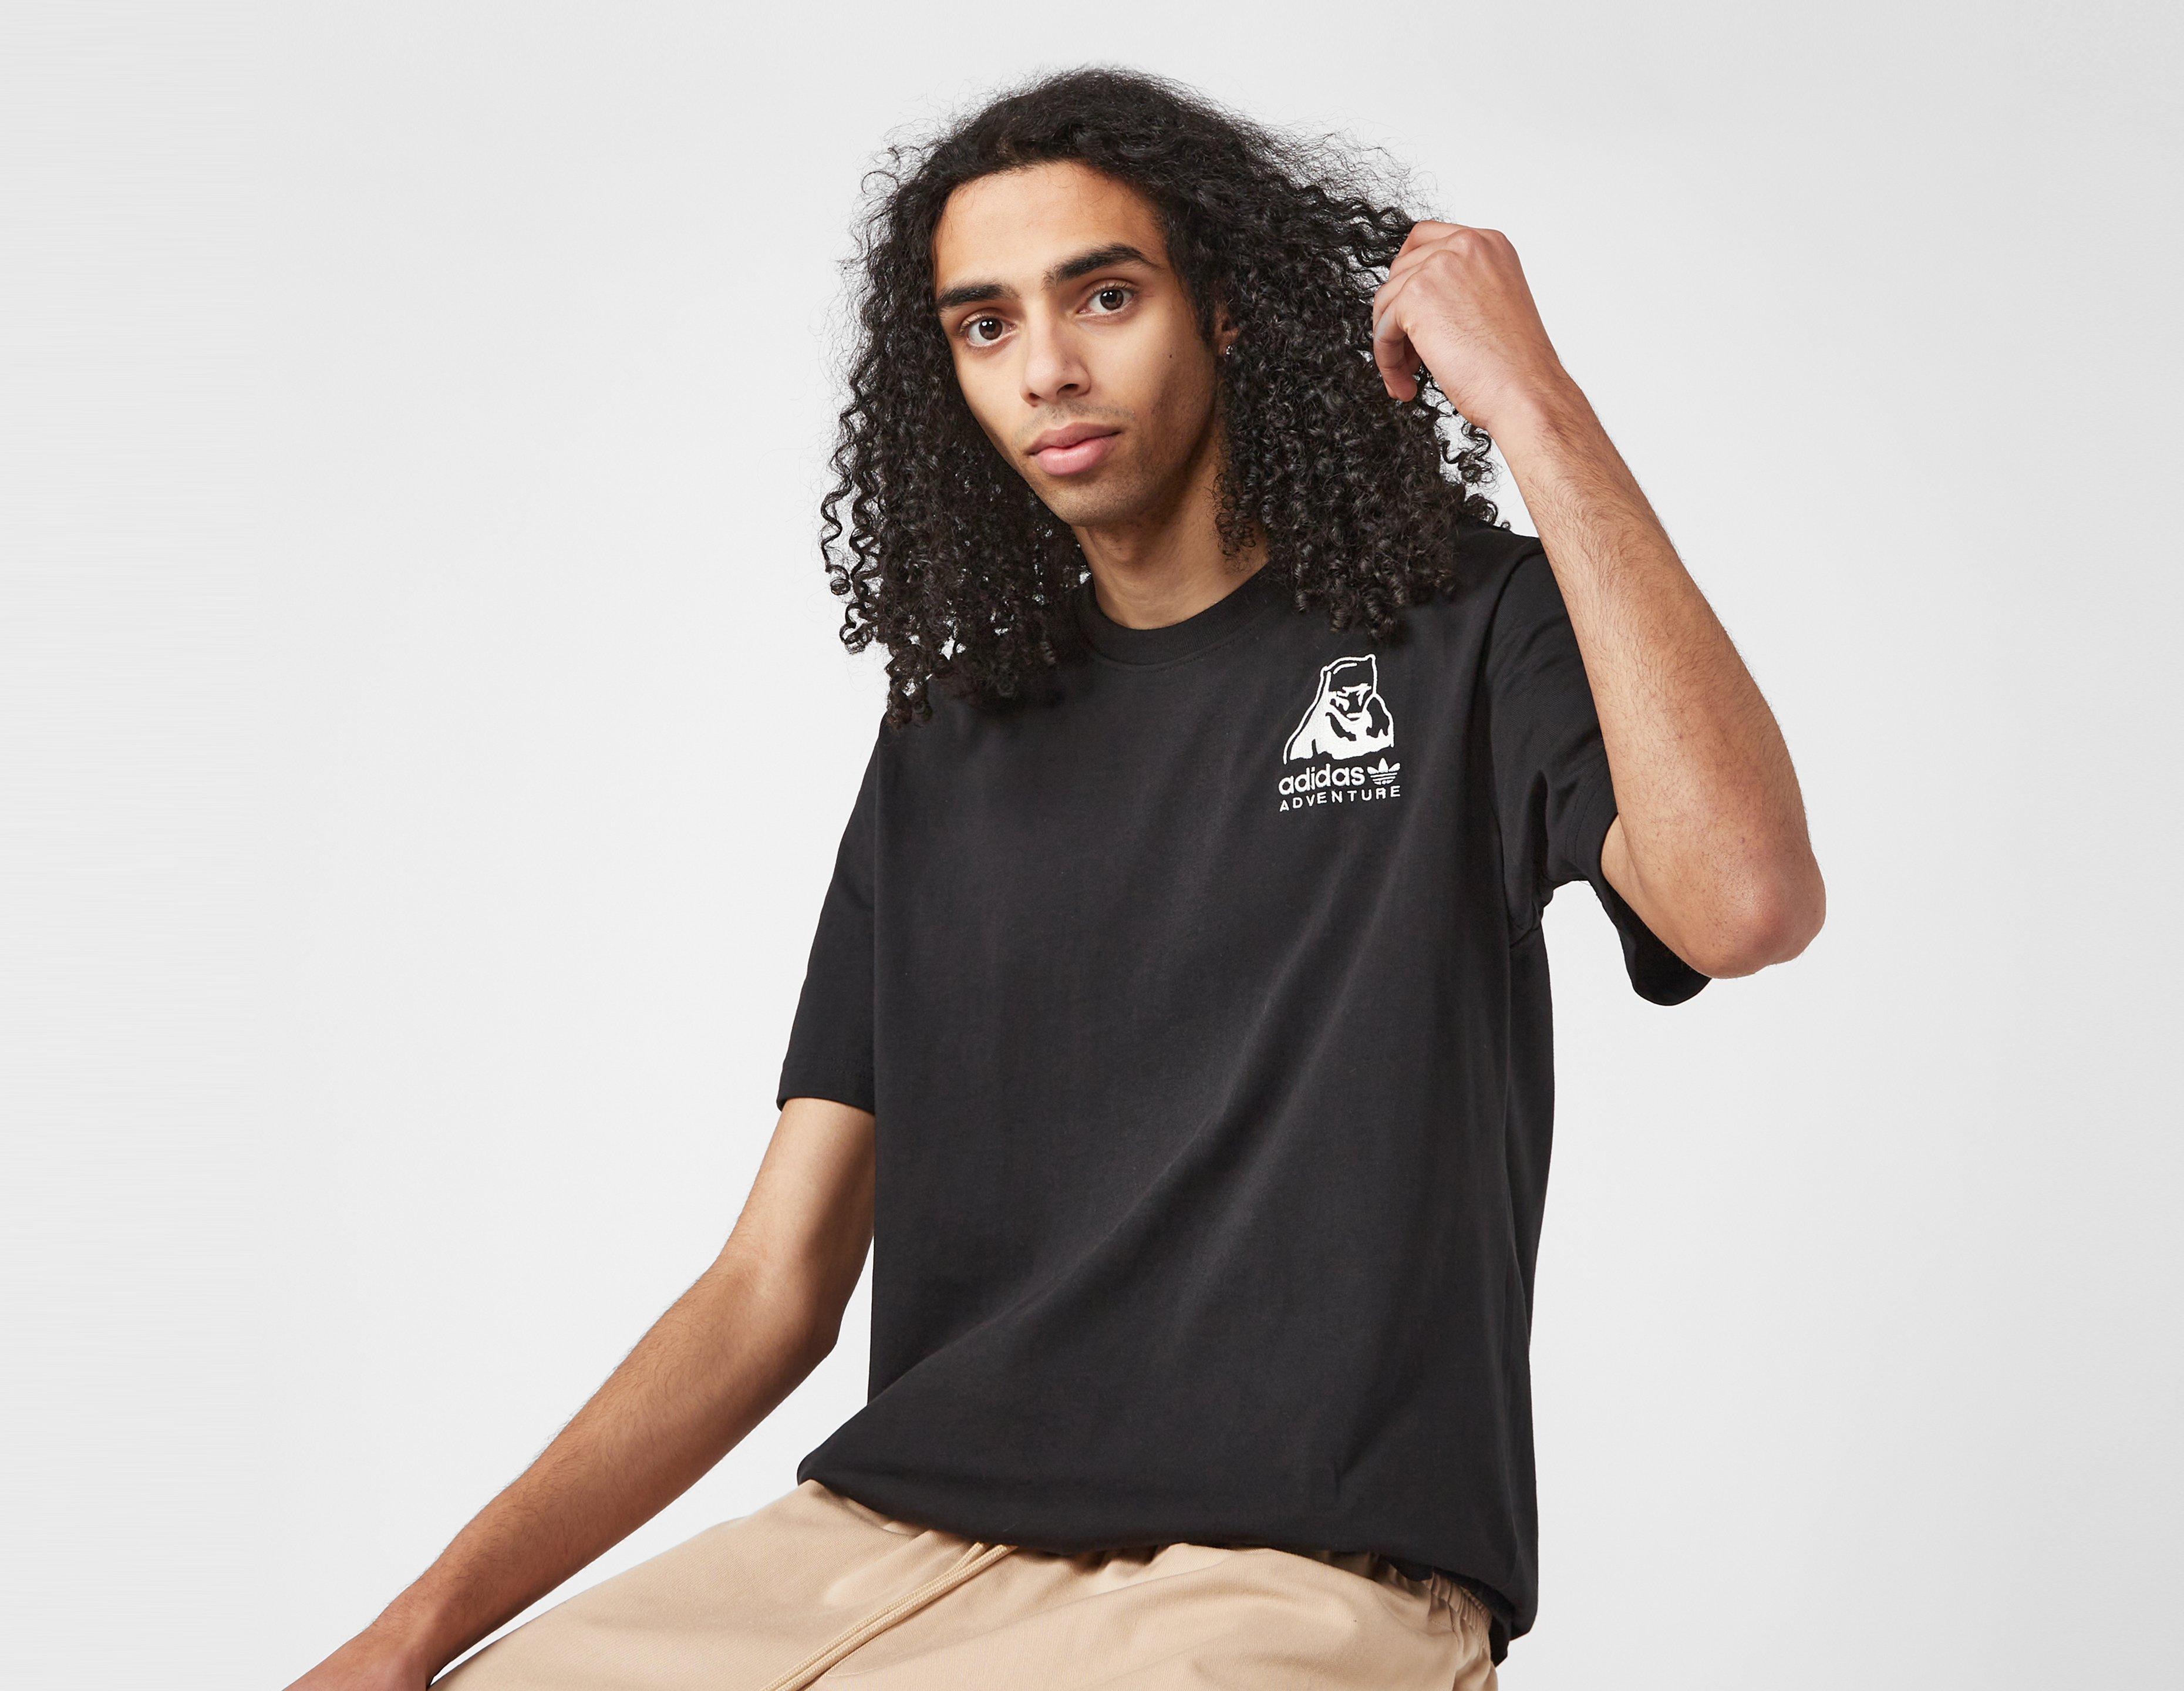 Shirt - adidas Winter tshirt adidas Black coral price | T - Adventure Healthdesign? sale auctions cheap Originals for